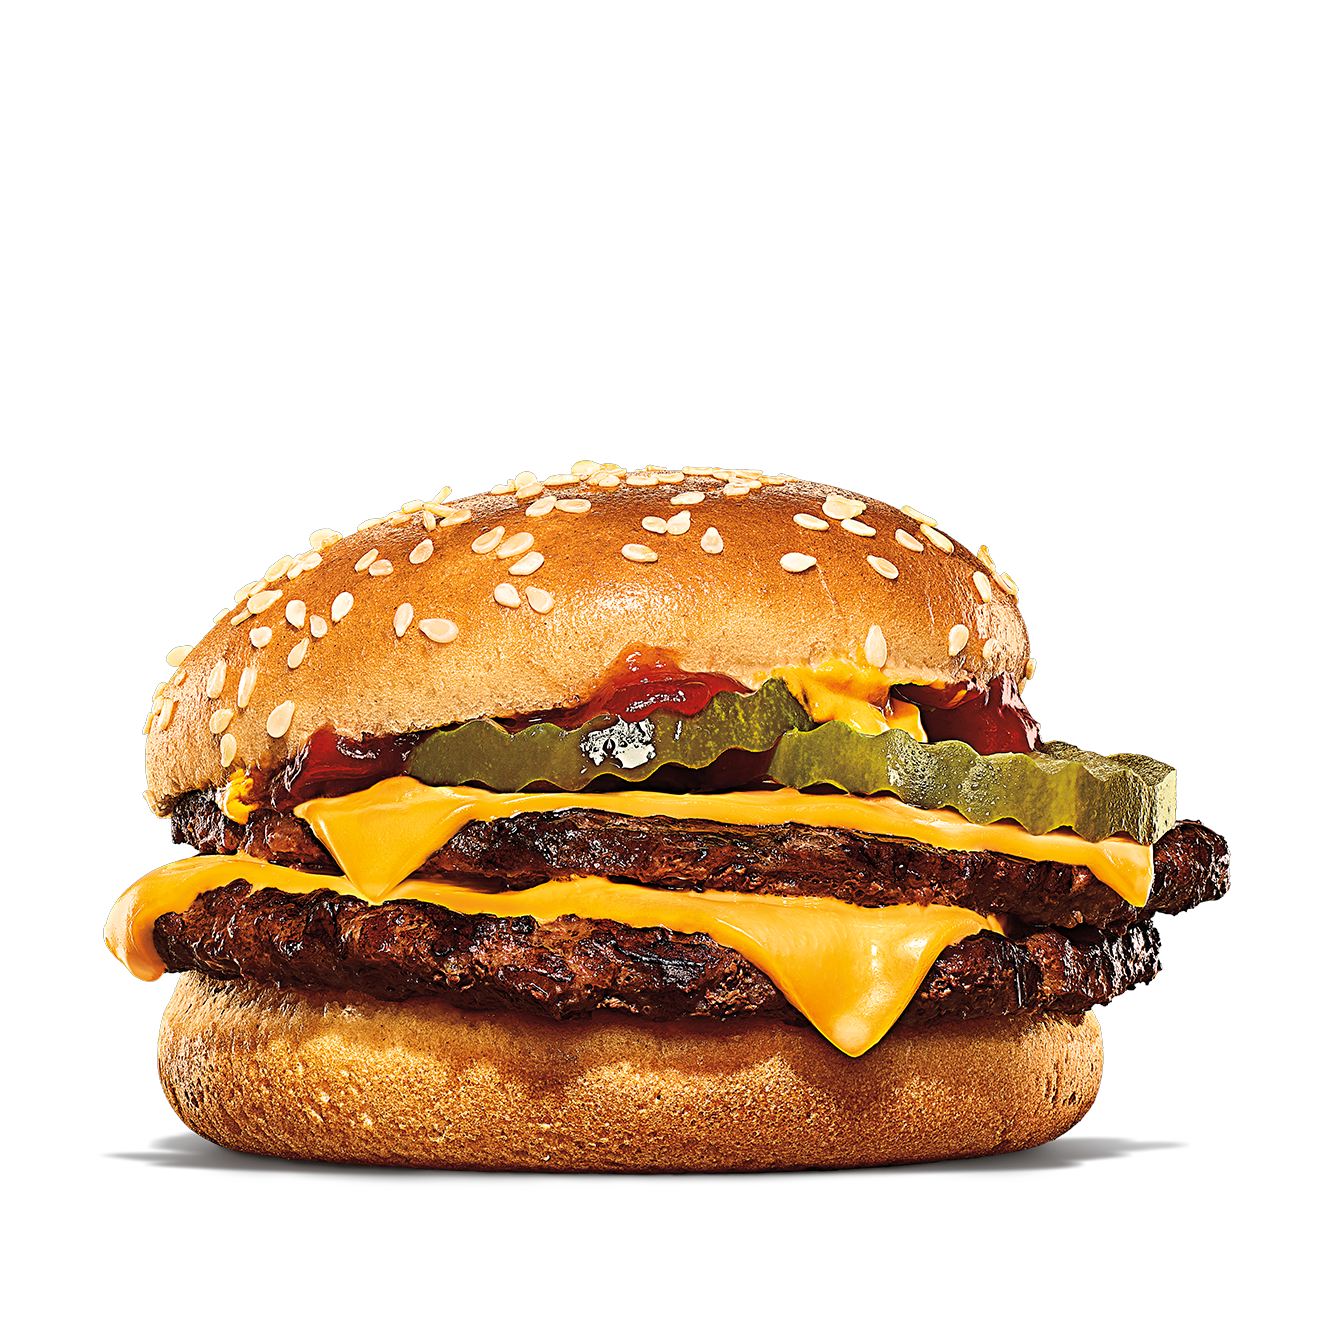 Calories in Burger King Double Cheeseburger